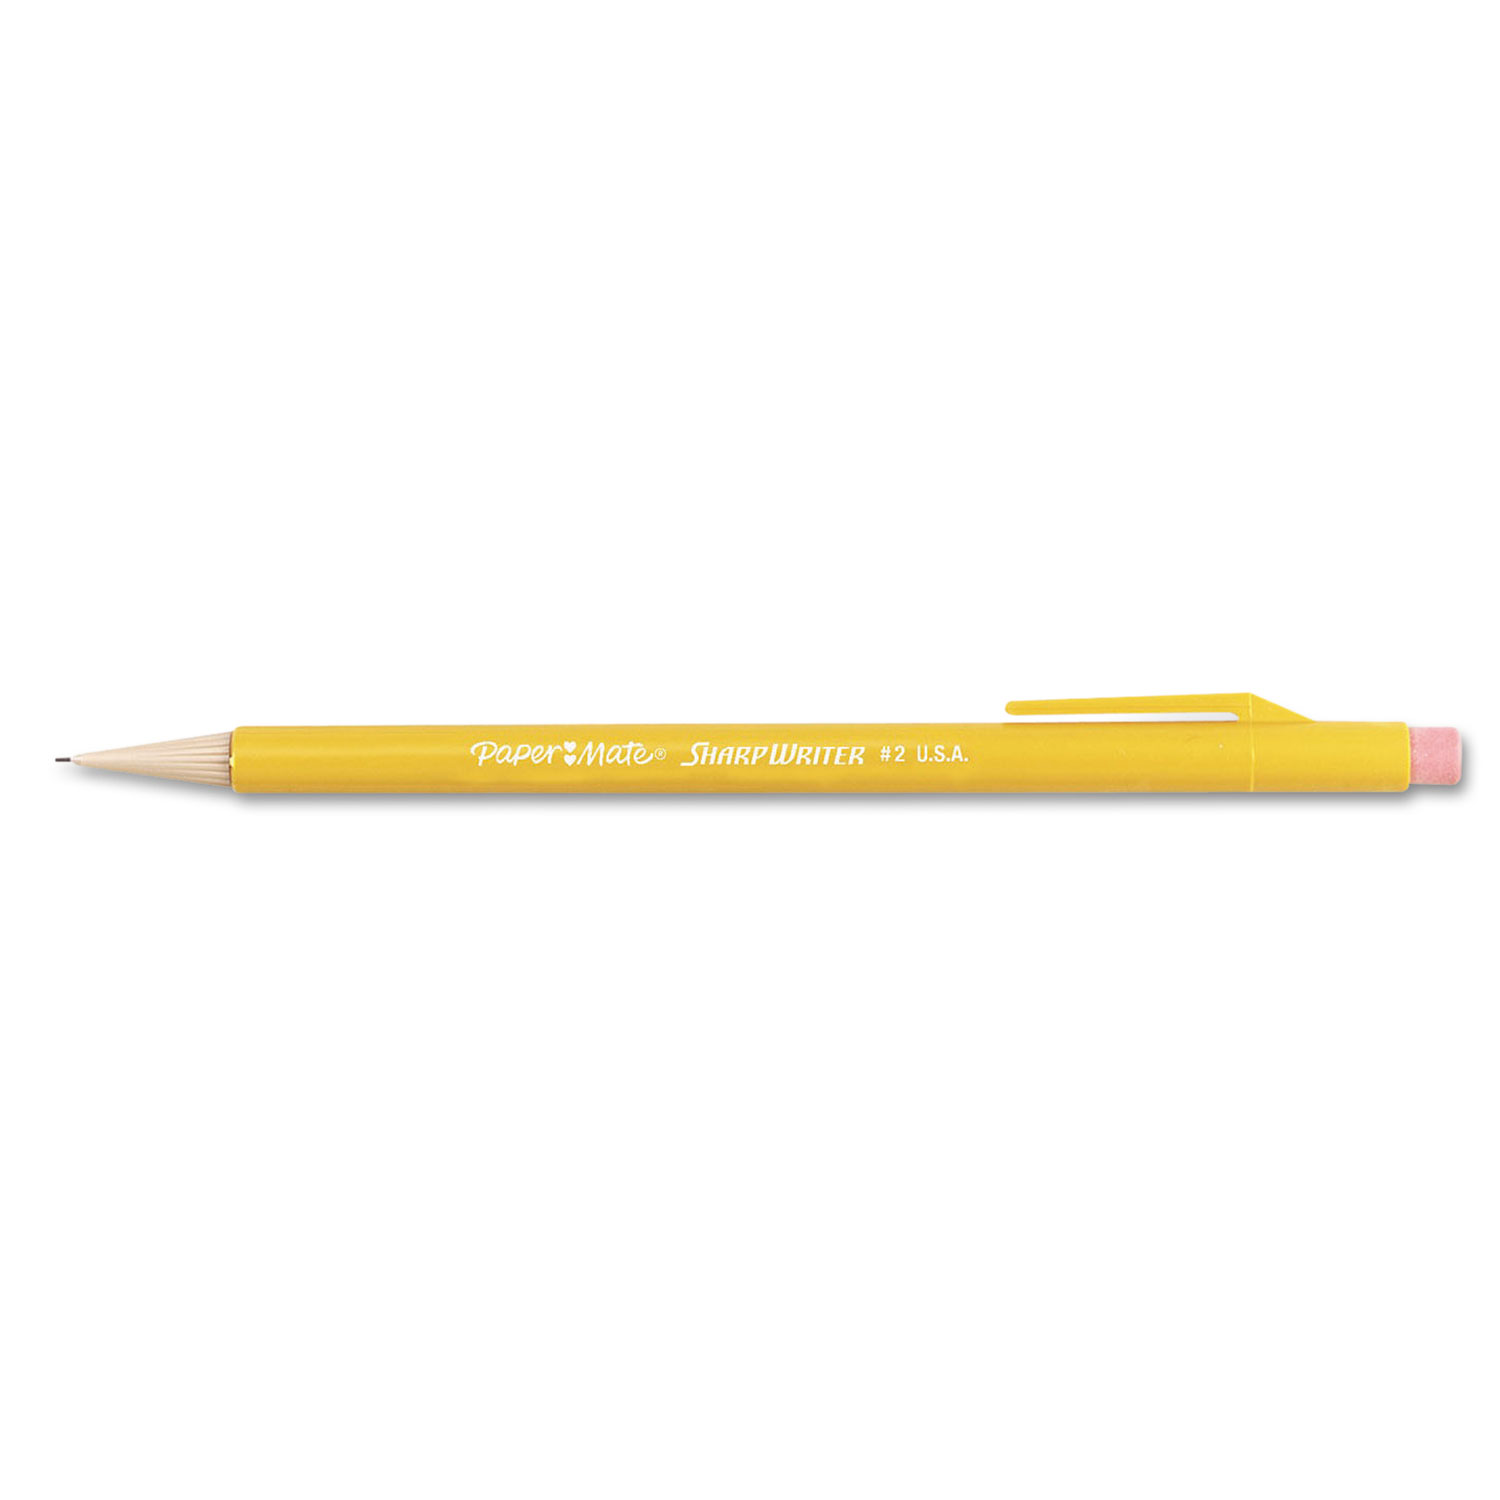  Paper Mate 1921221 Sharpwriter Mechanical Pencil, 0.7 mm, HB (#2.5), Black Lead, Classic Yellow Barrel, 36/Box (PAP1921221) 